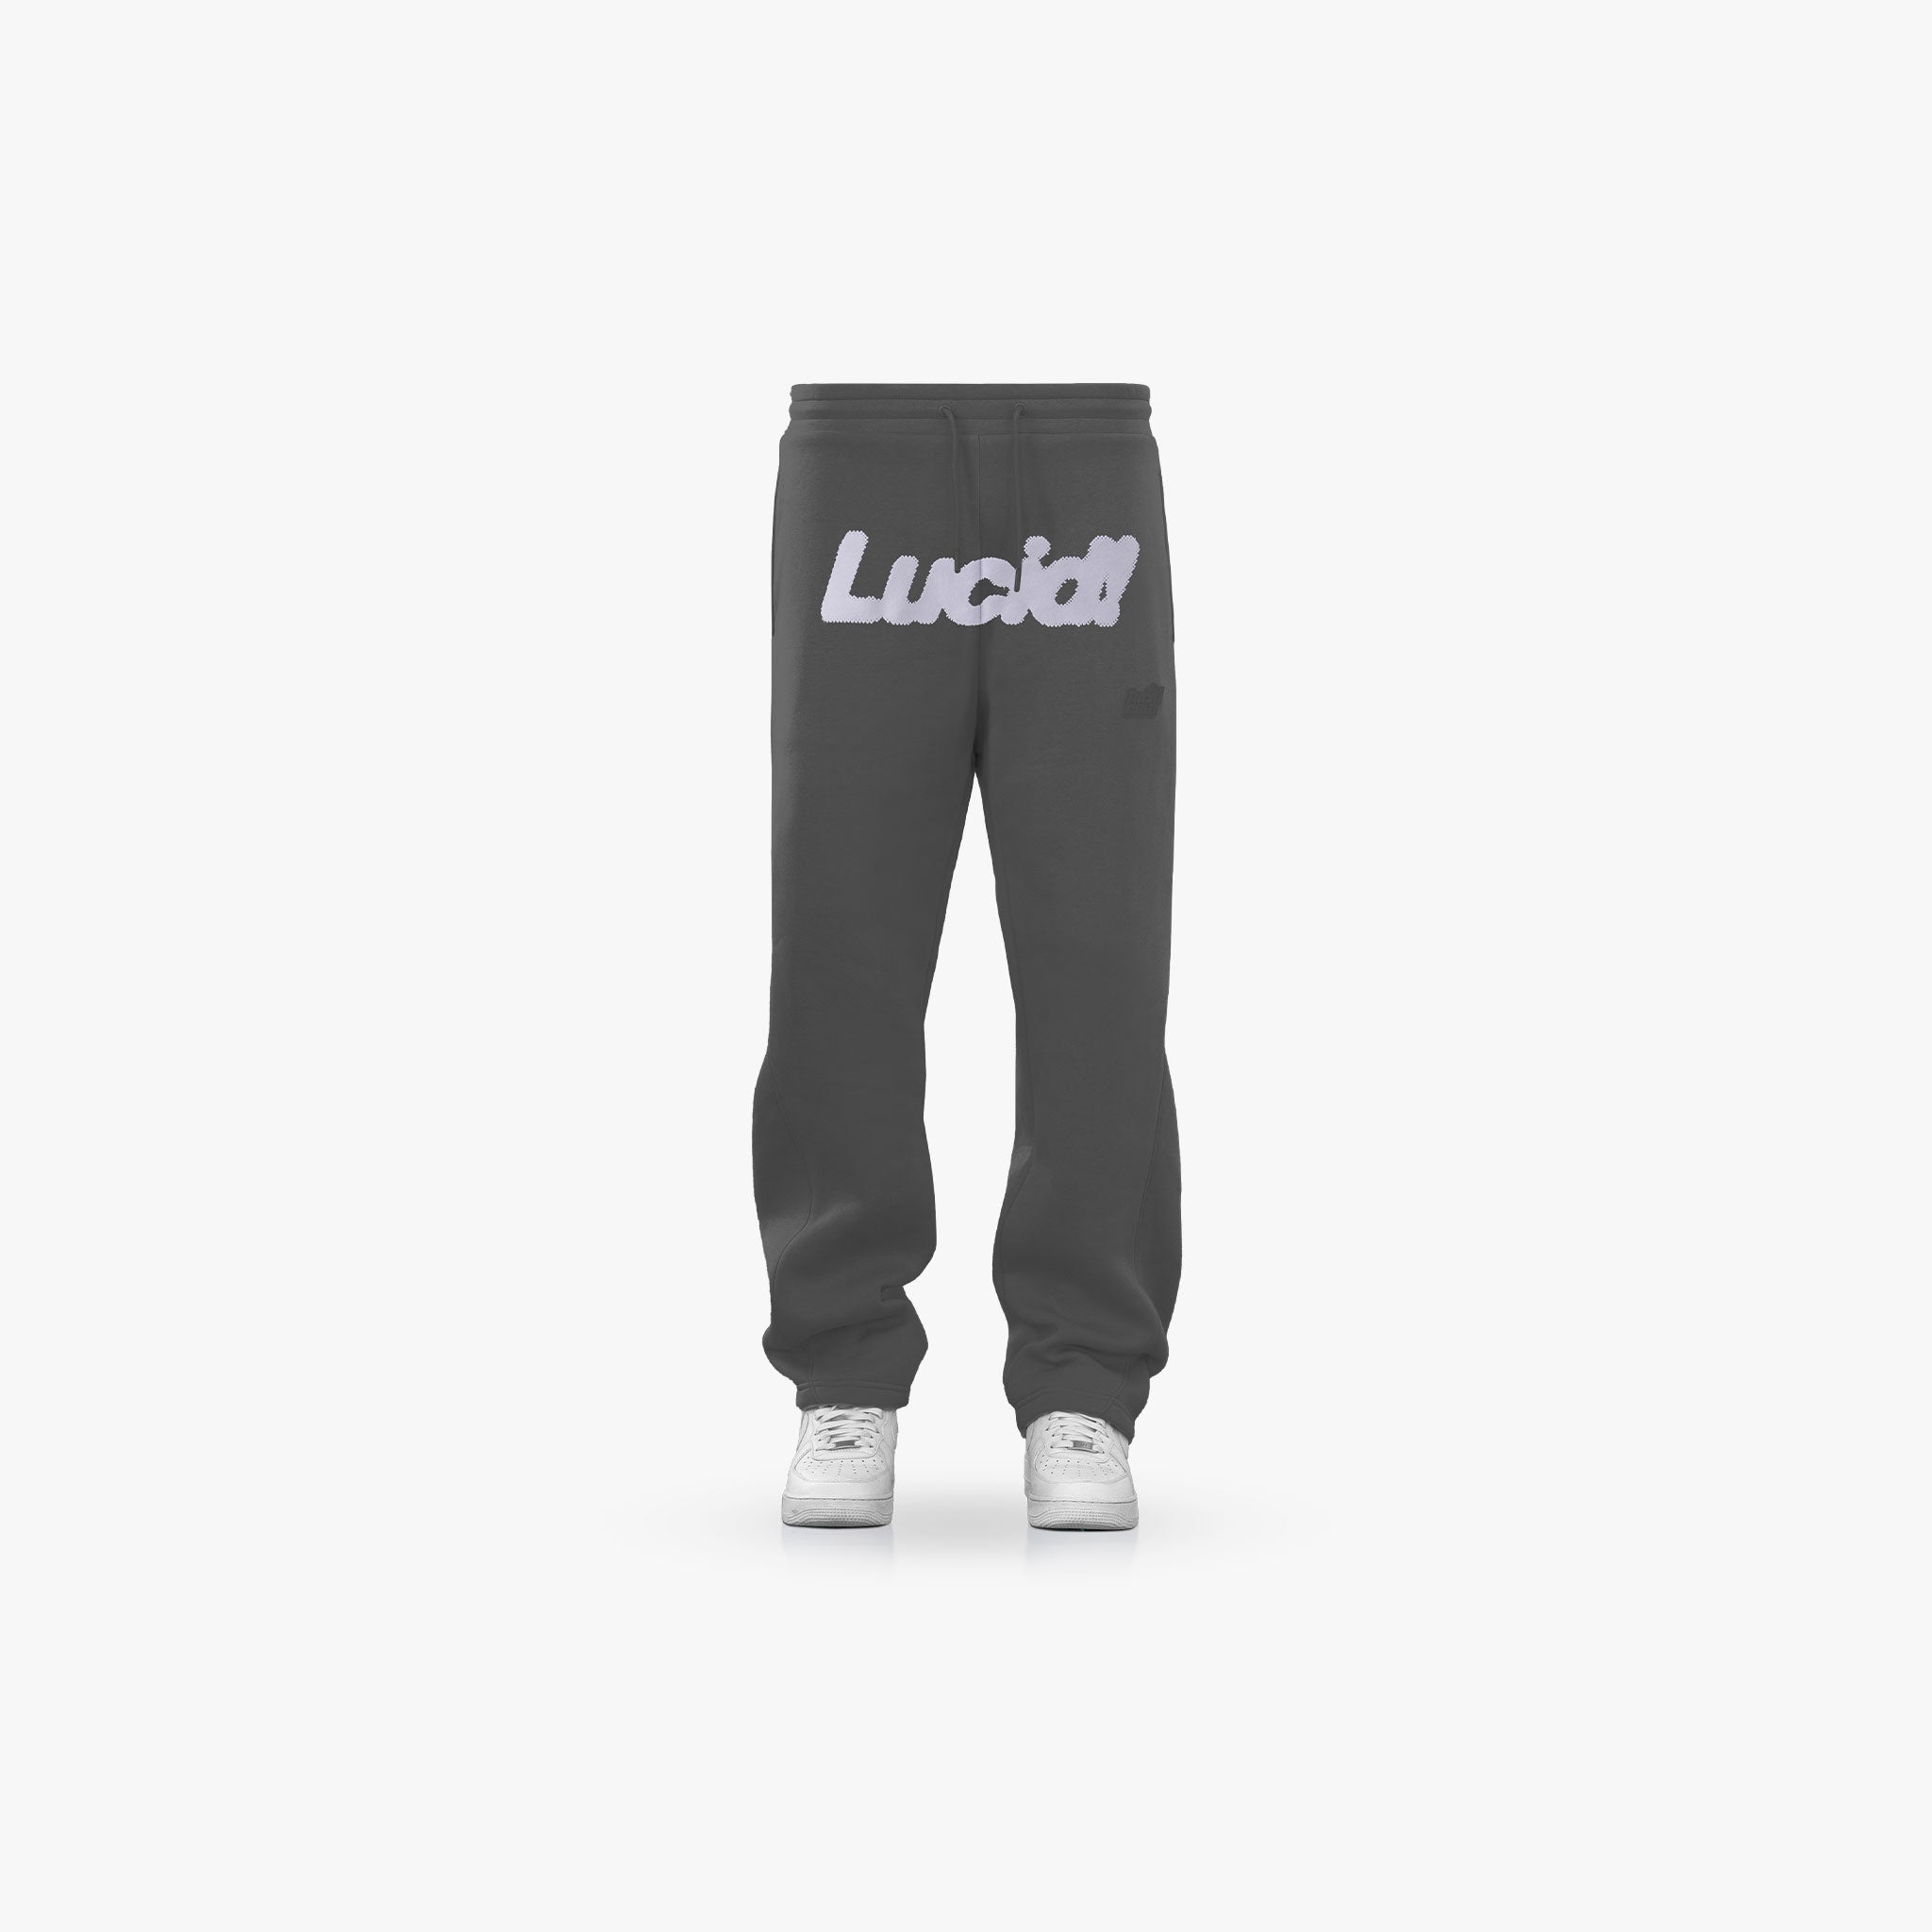 Lucid! Sweatpants Grey/Grey